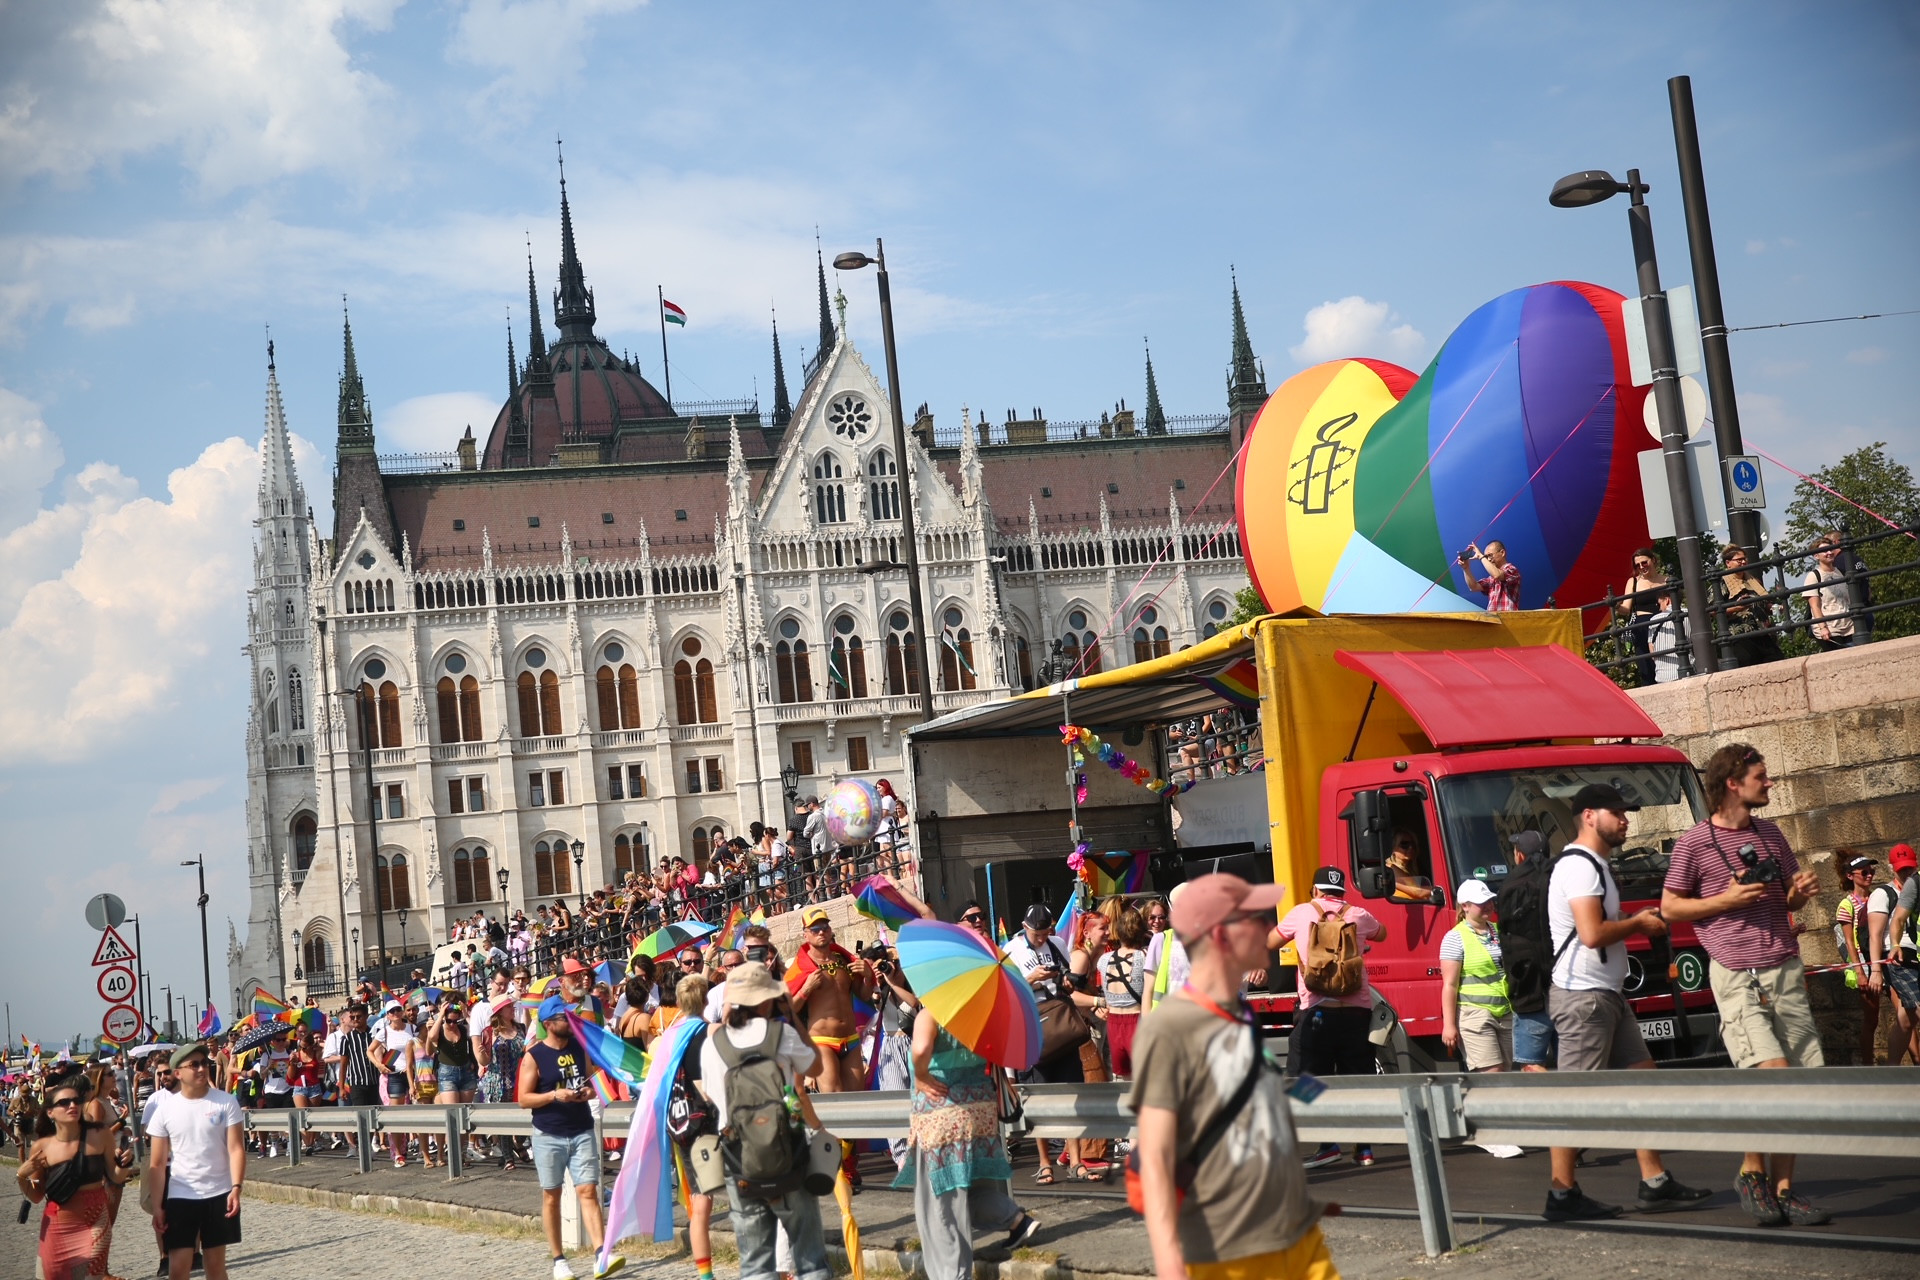 Július 15-én lesz a Budapest Pride Felvonulás